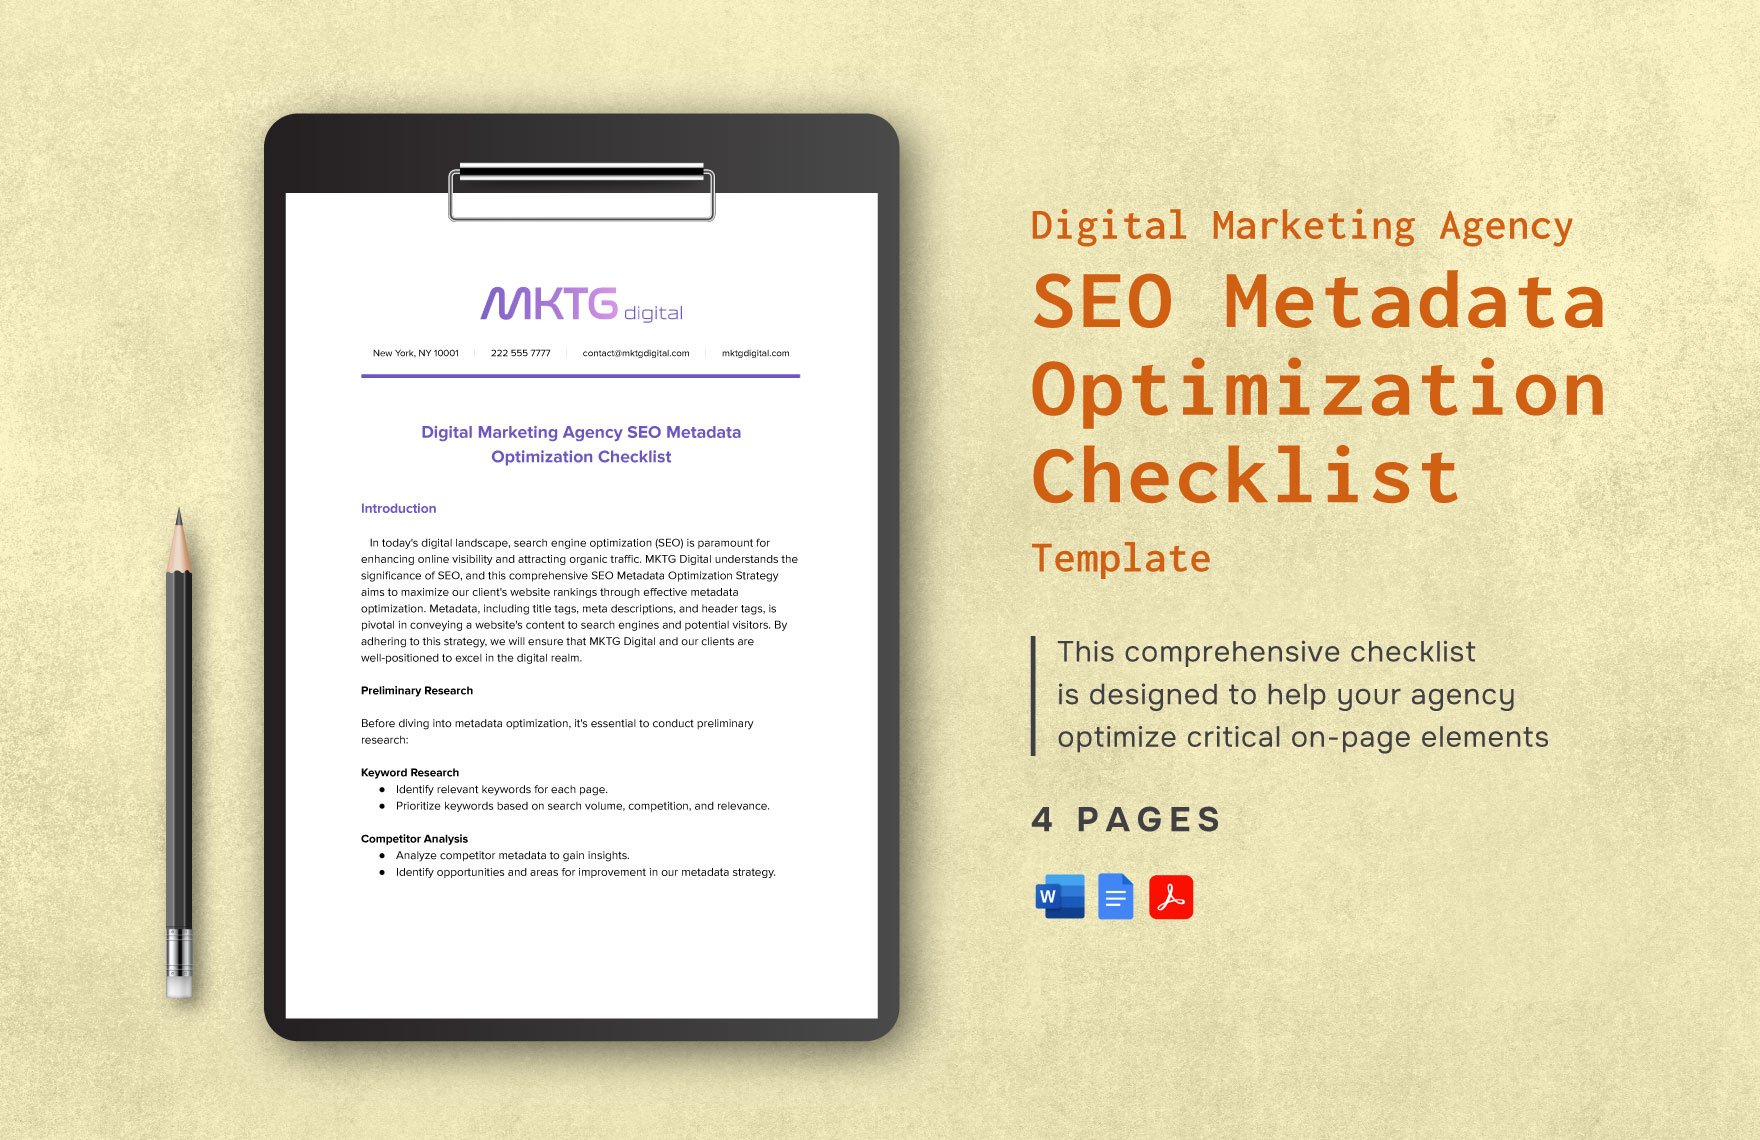 Digital Marketing Agency SEO Metadata Optimization Checklist Template